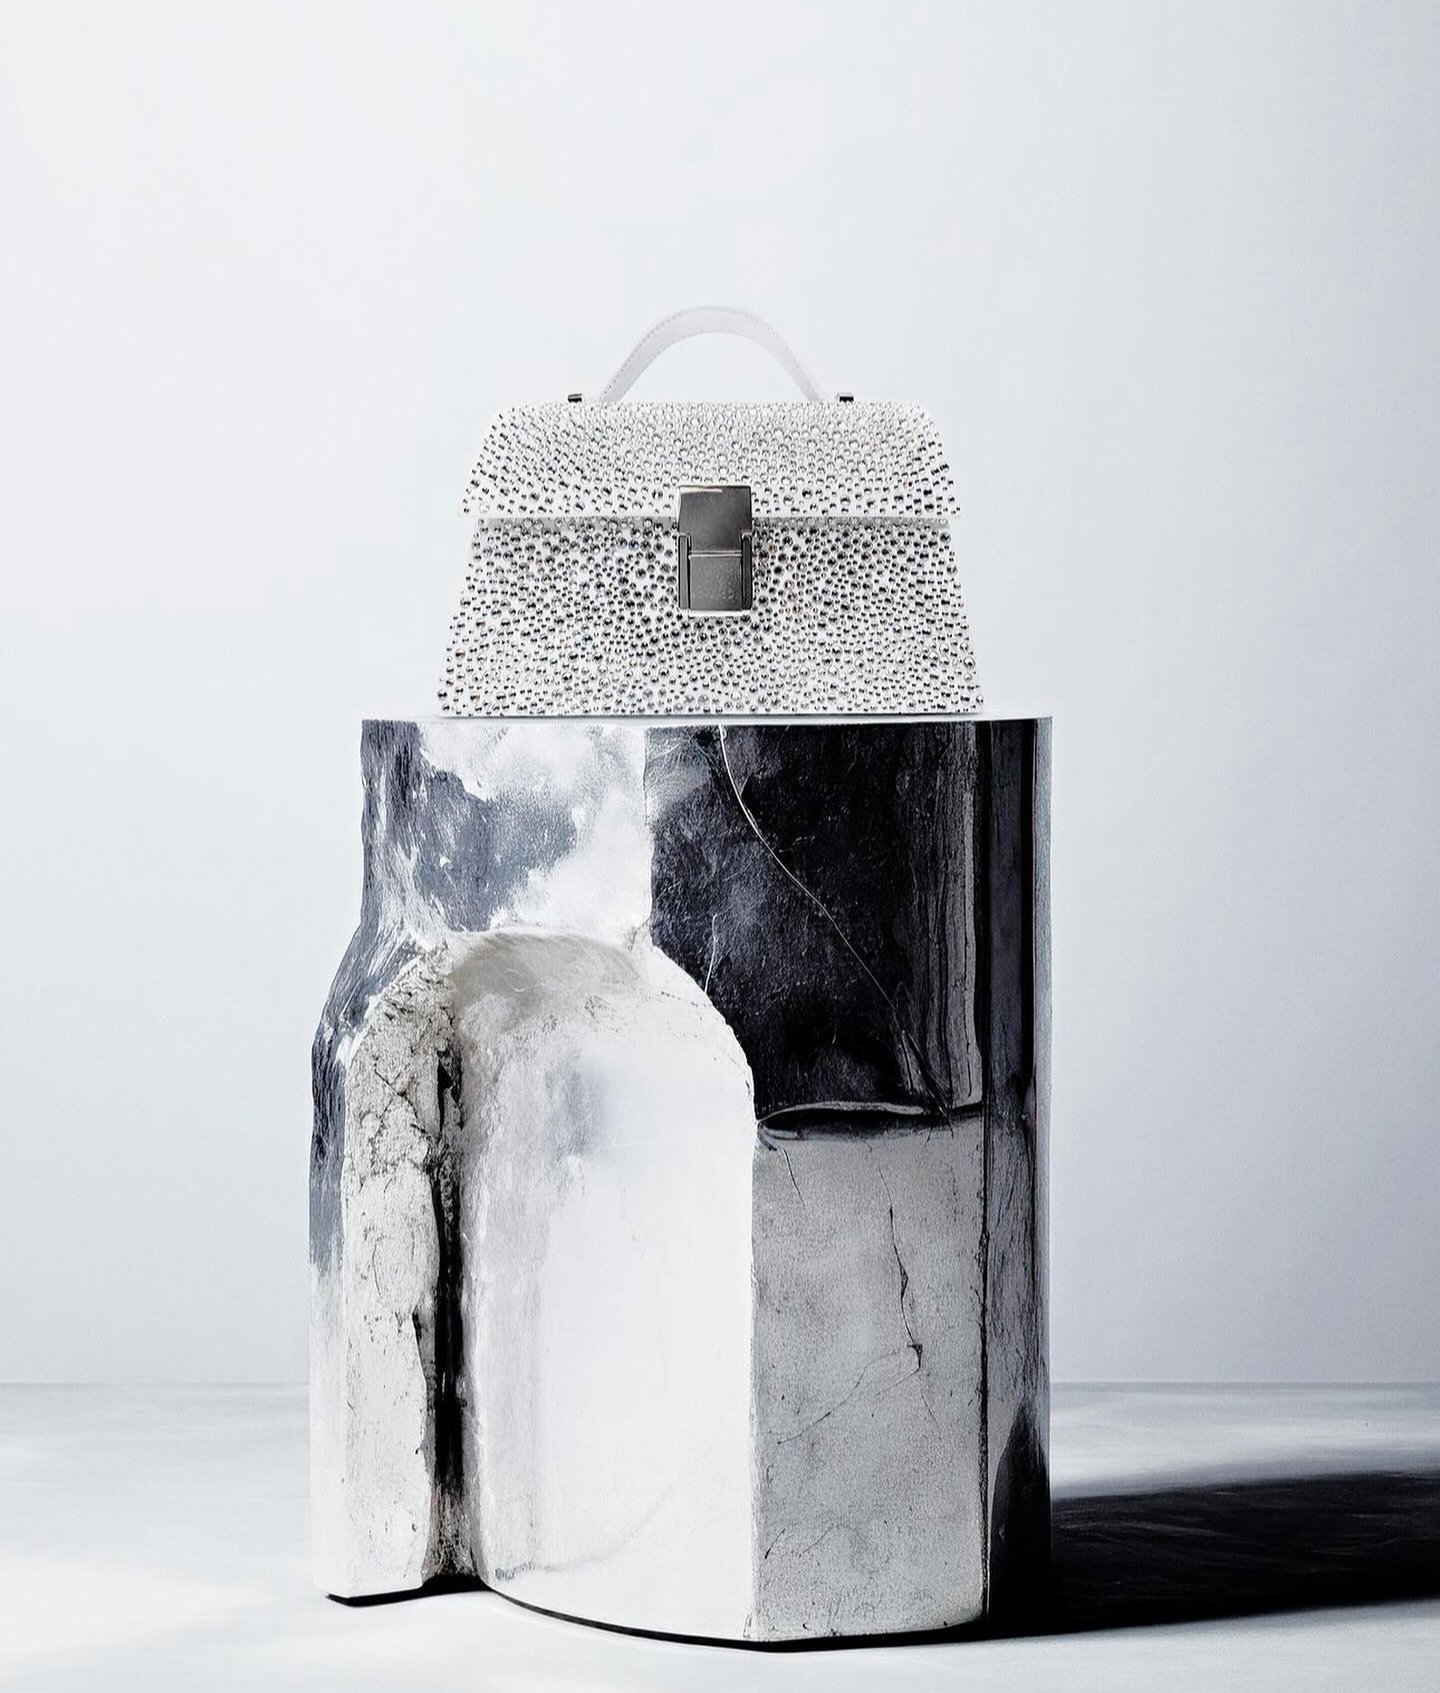 The MICRO STELLA in silver crystal: placing innovation on a pedestal - @marinaraphaelofficial 

#marinaraphael #crystal #bag #designerbag